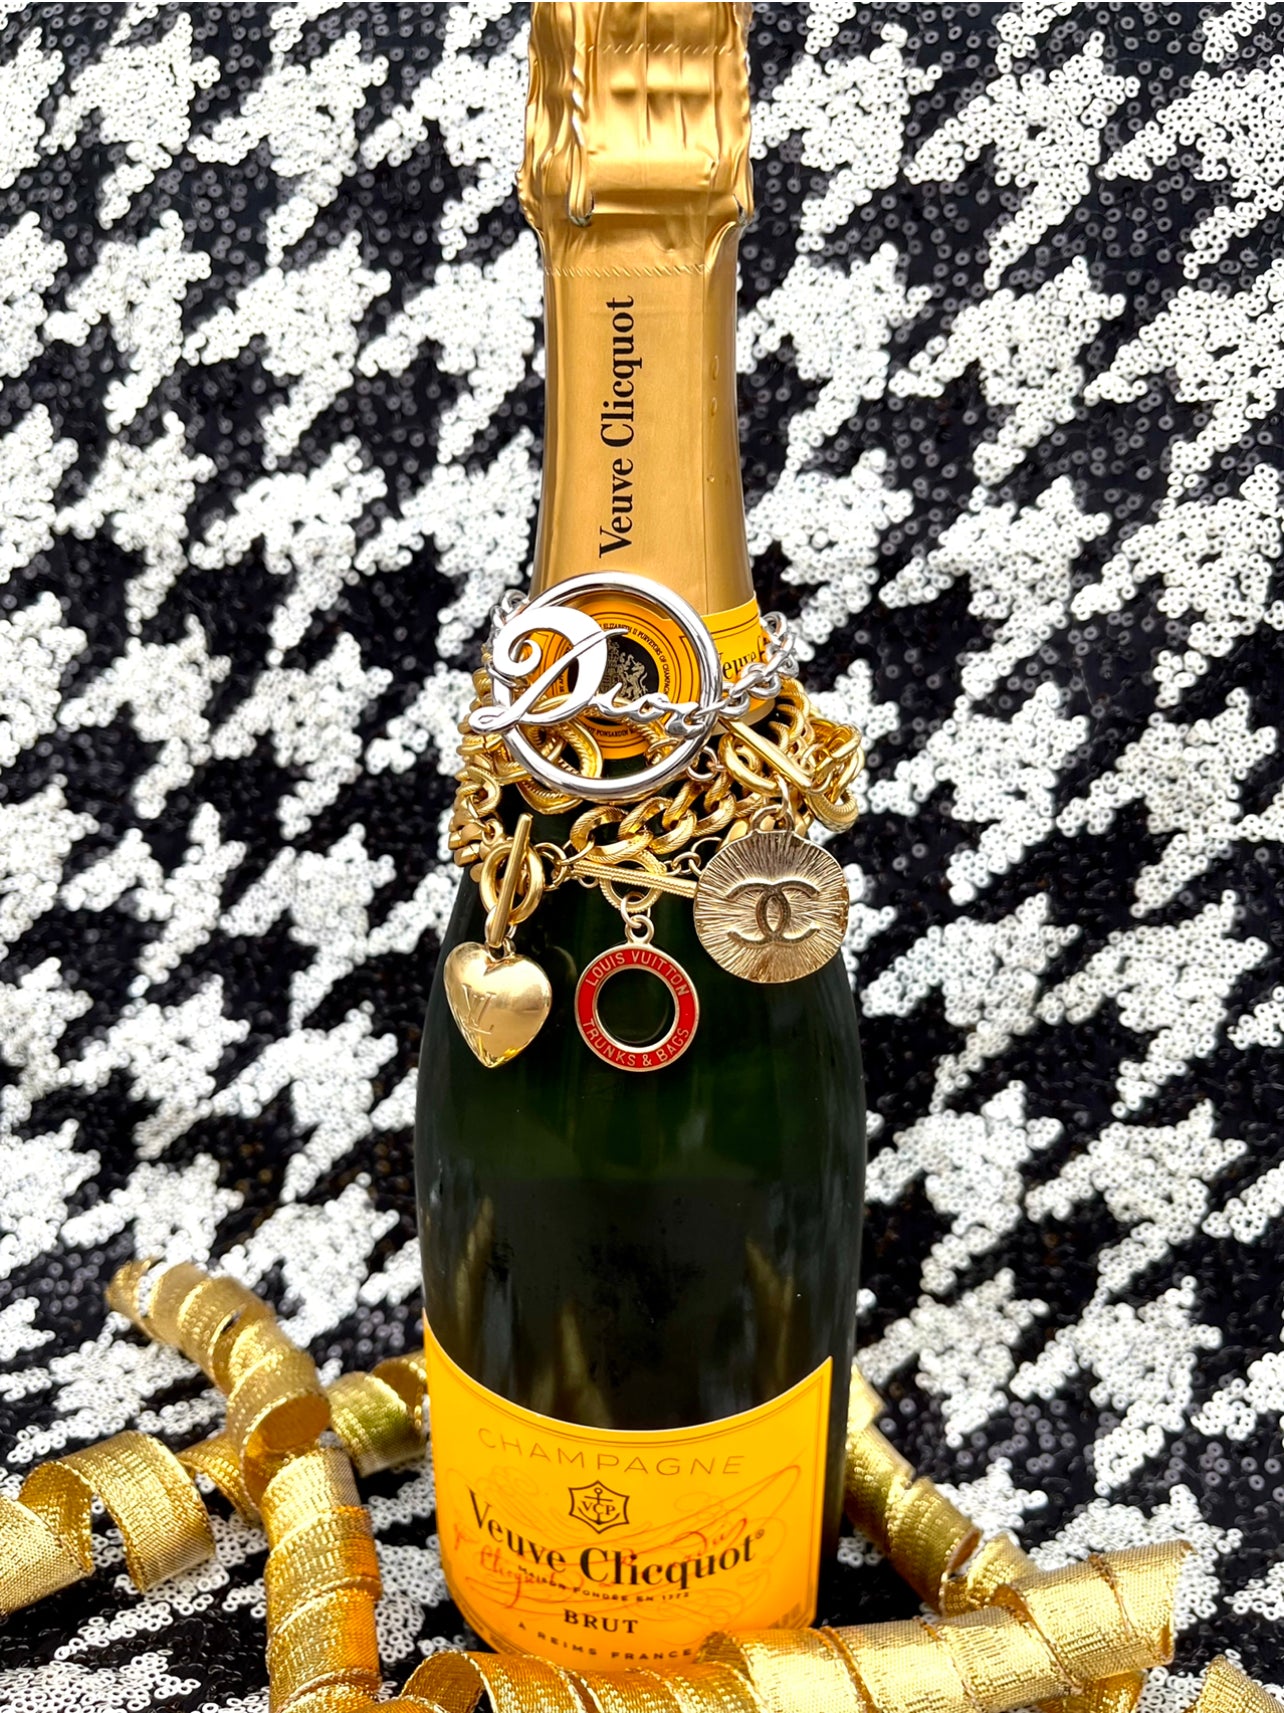 vuitton champagne bottle